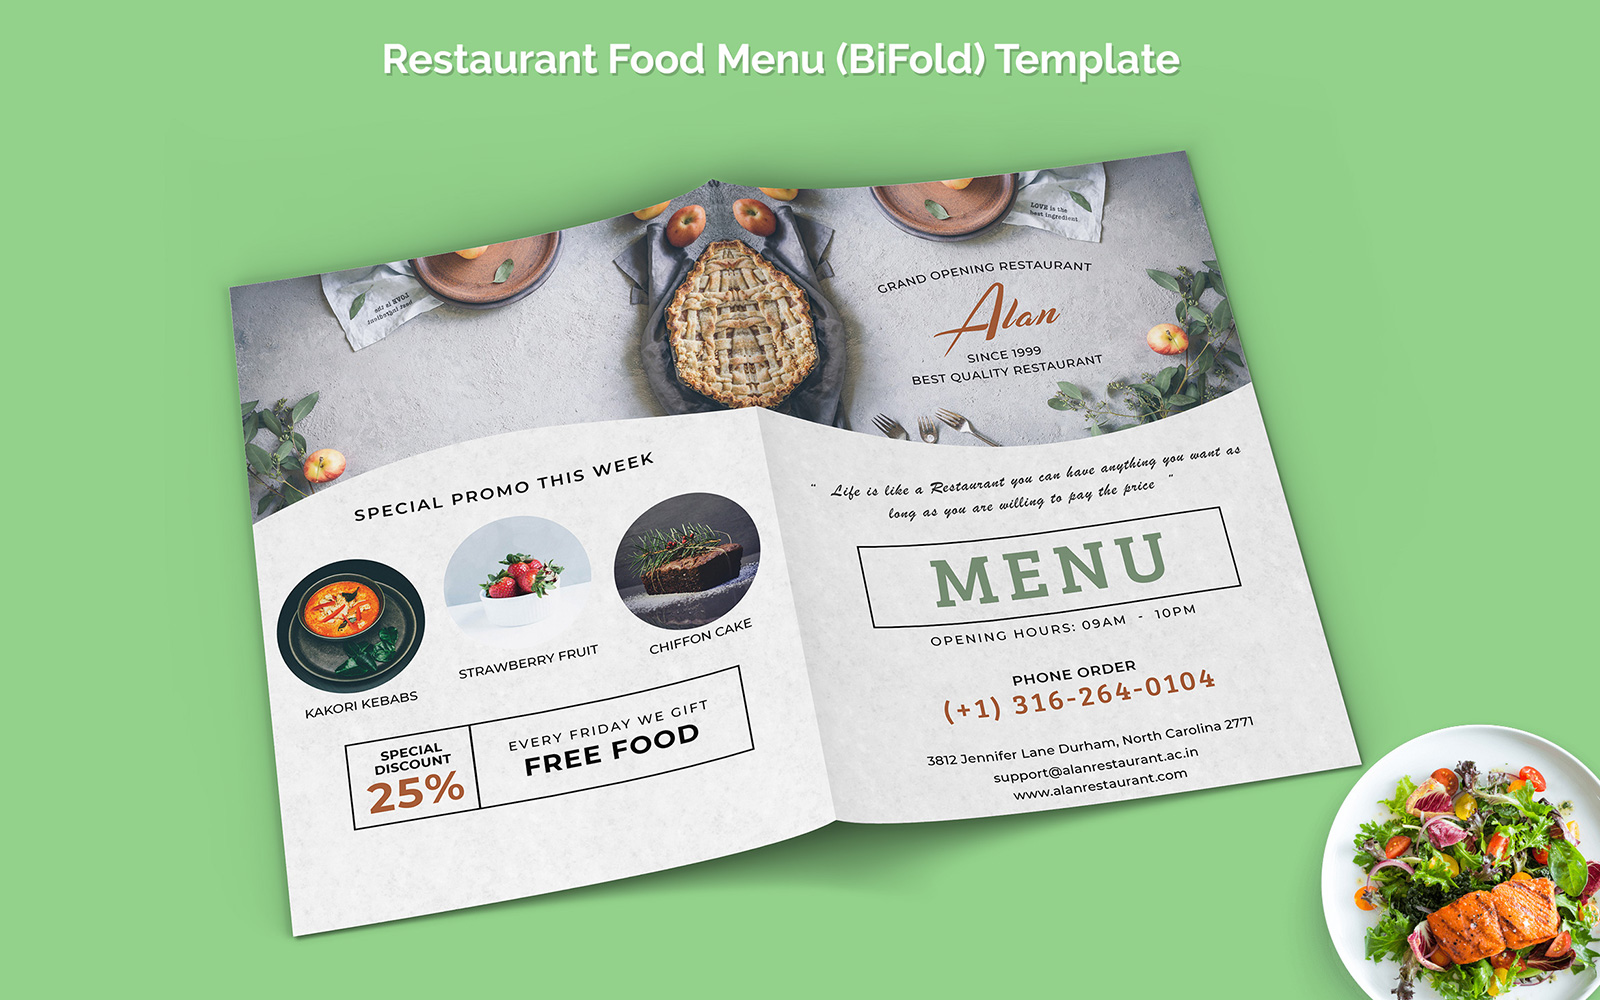 Restaurant Food Menu Bifold - Corporate Identity Template